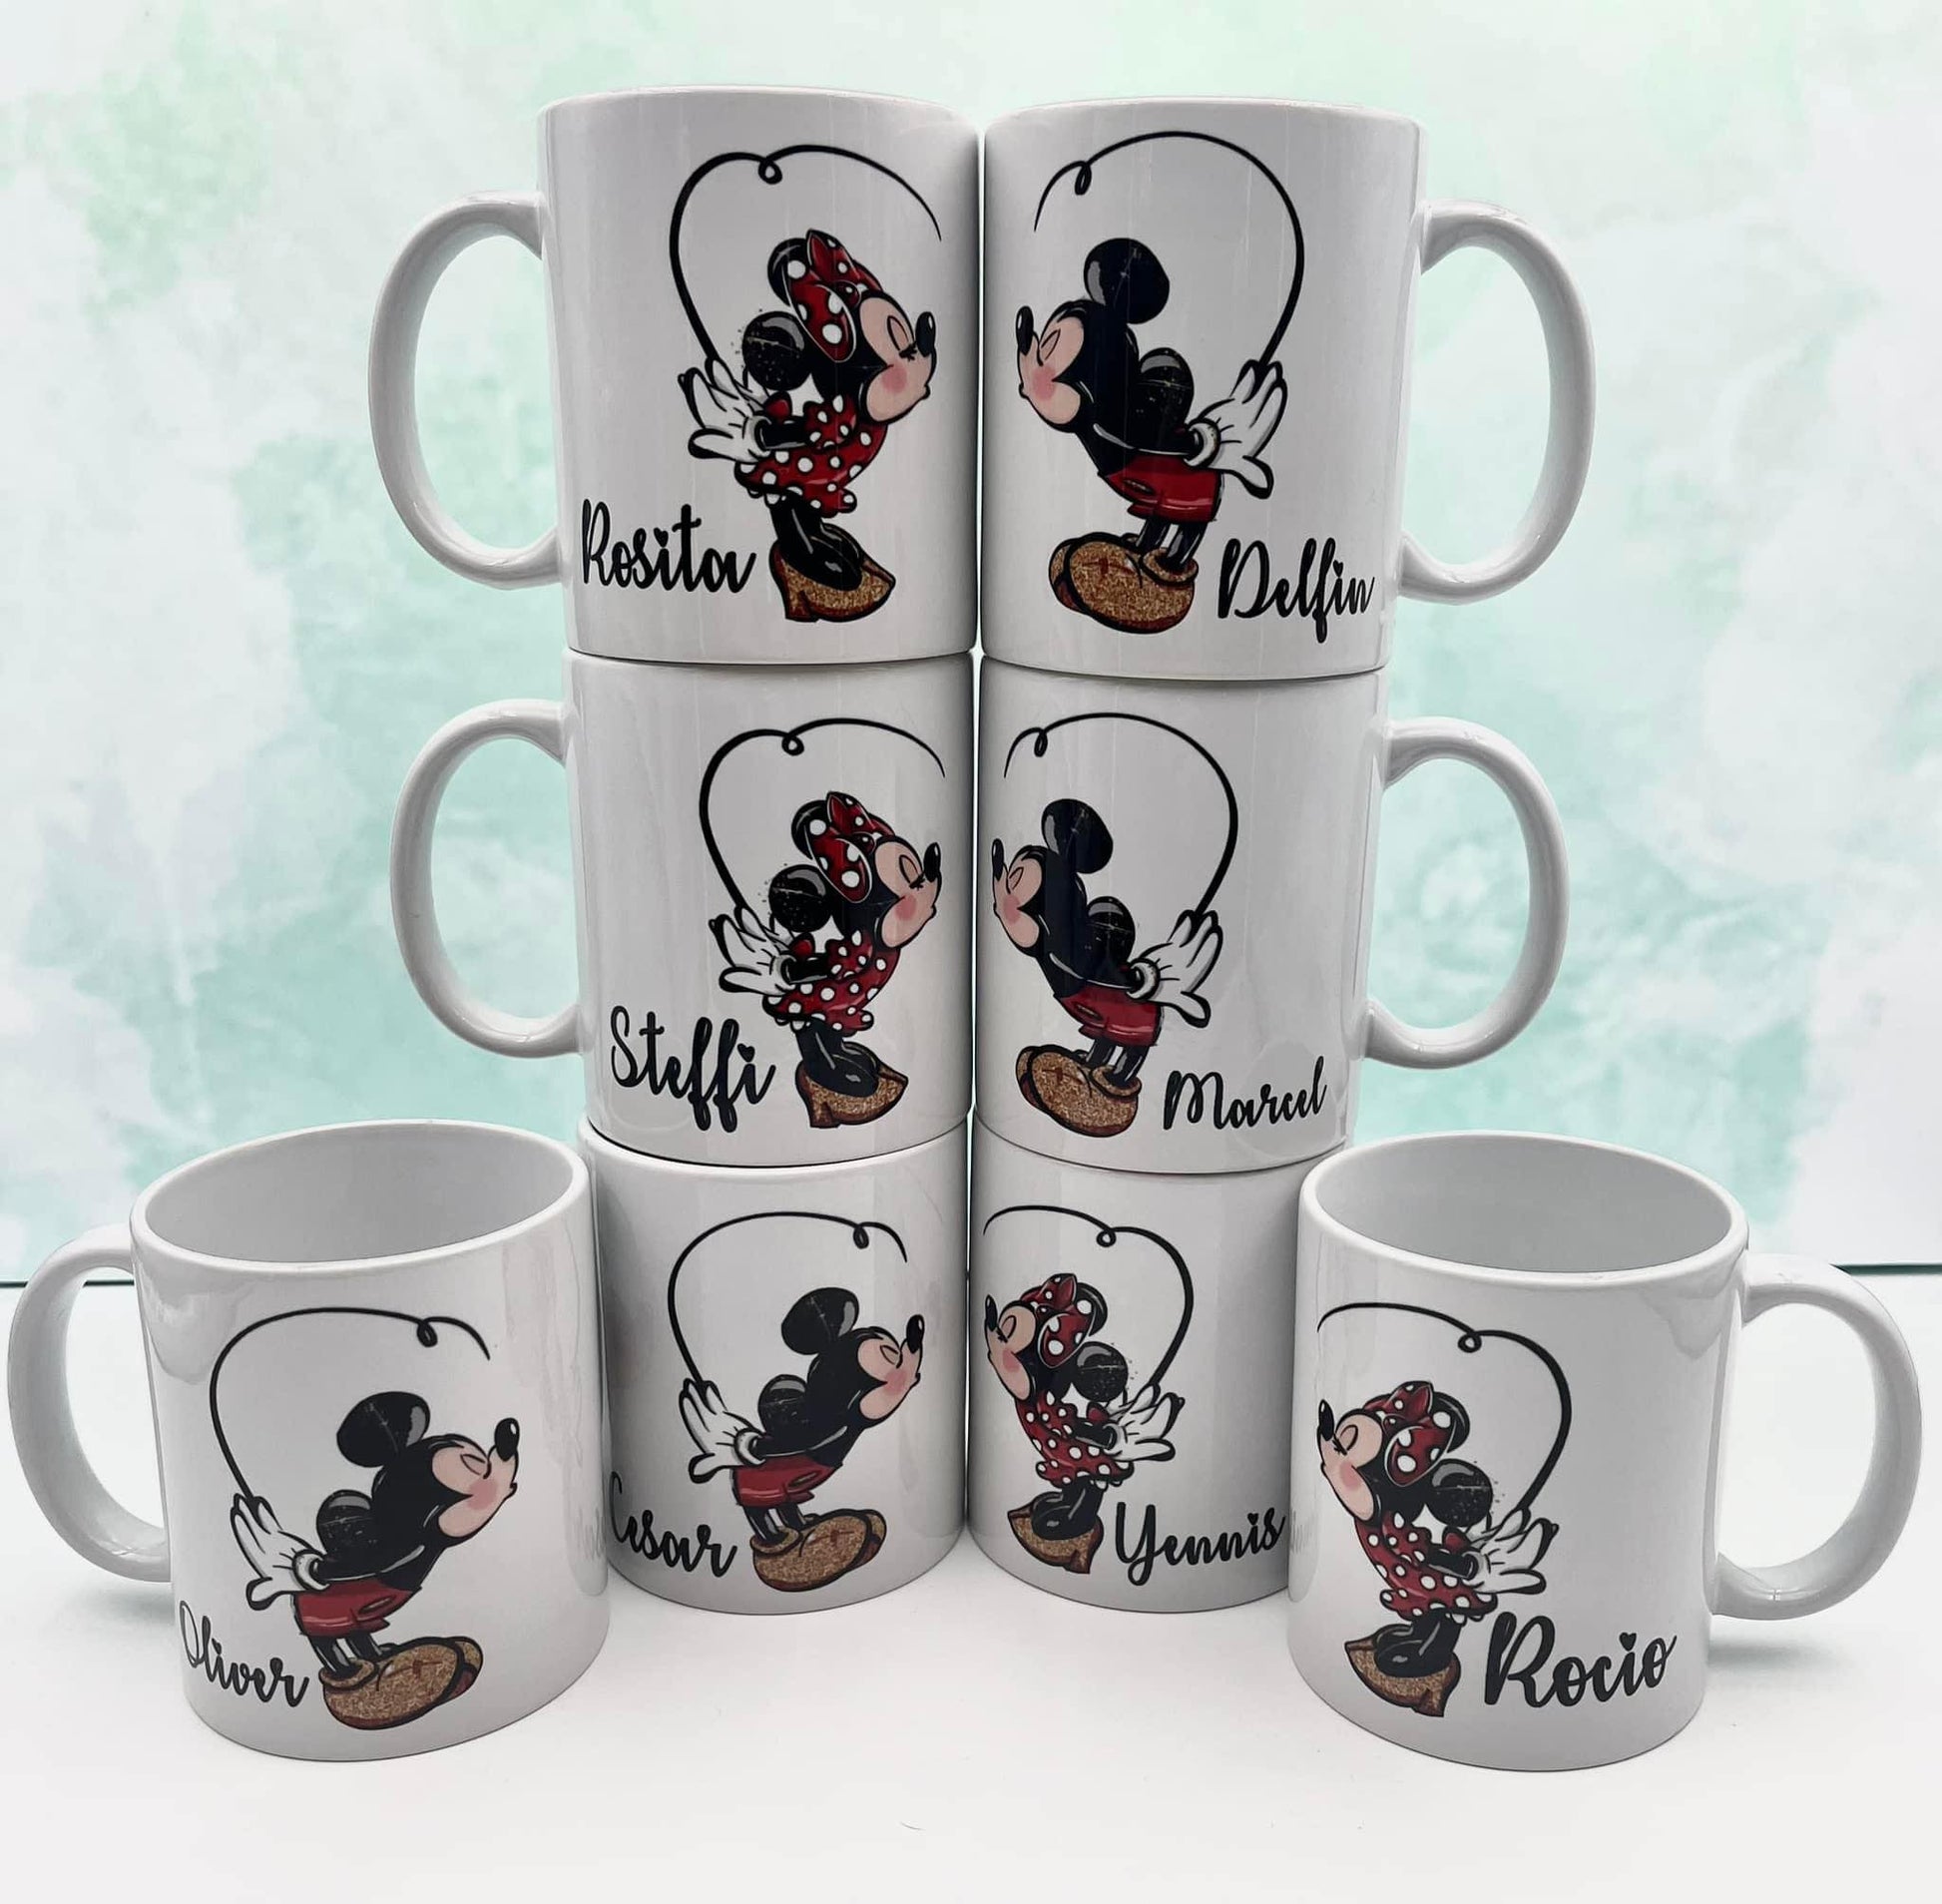 Mickey & Minnie Personalized two Mugs